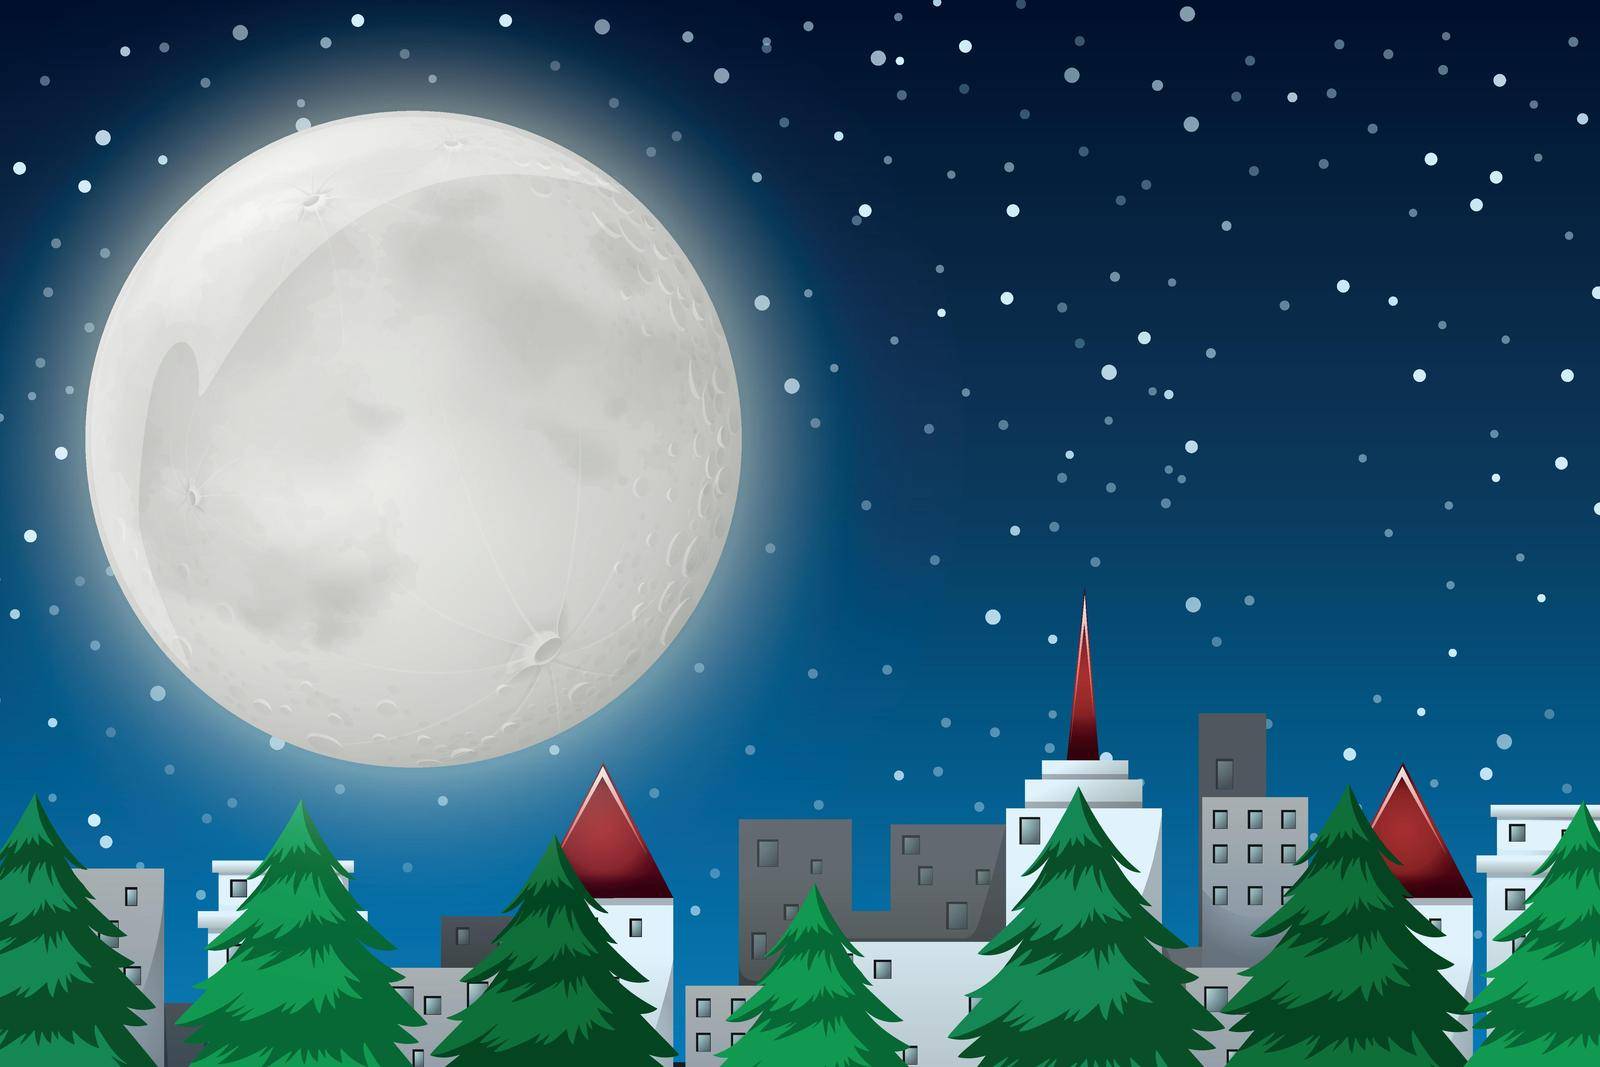 A winter night scene illustration